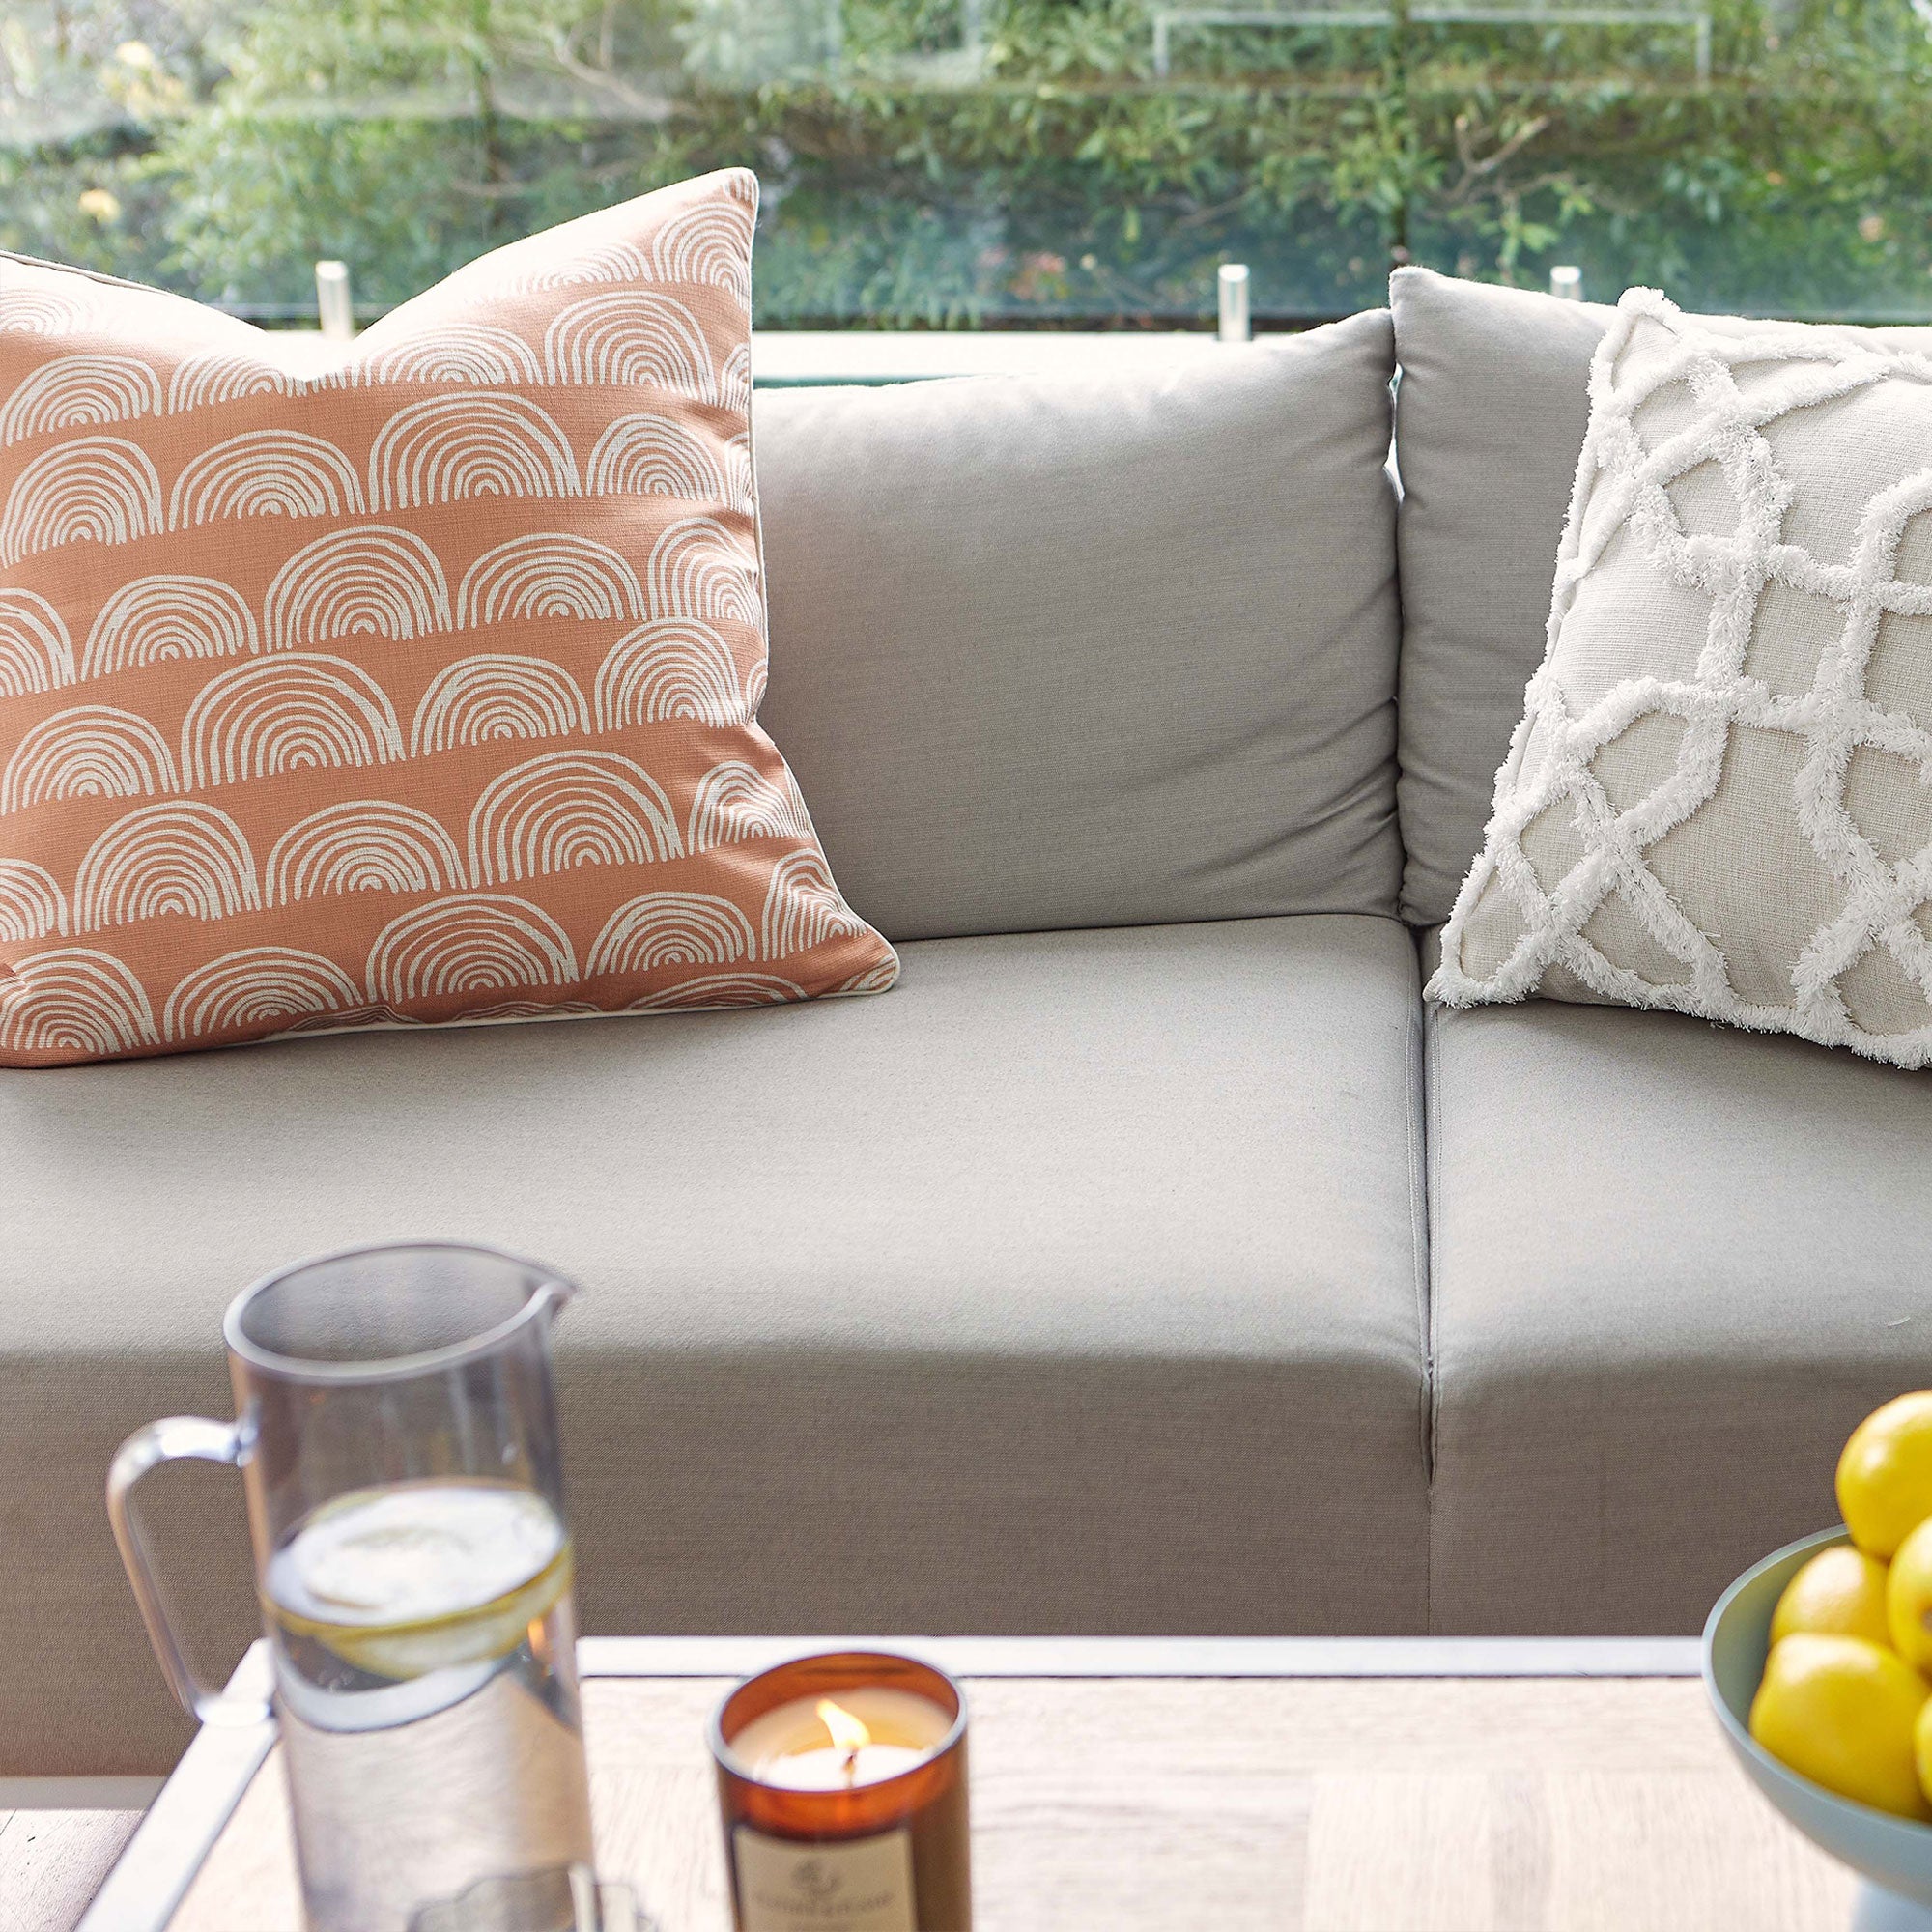 cushion-cover-boho-textured-single-sided-lattice-50cm-x-50cm